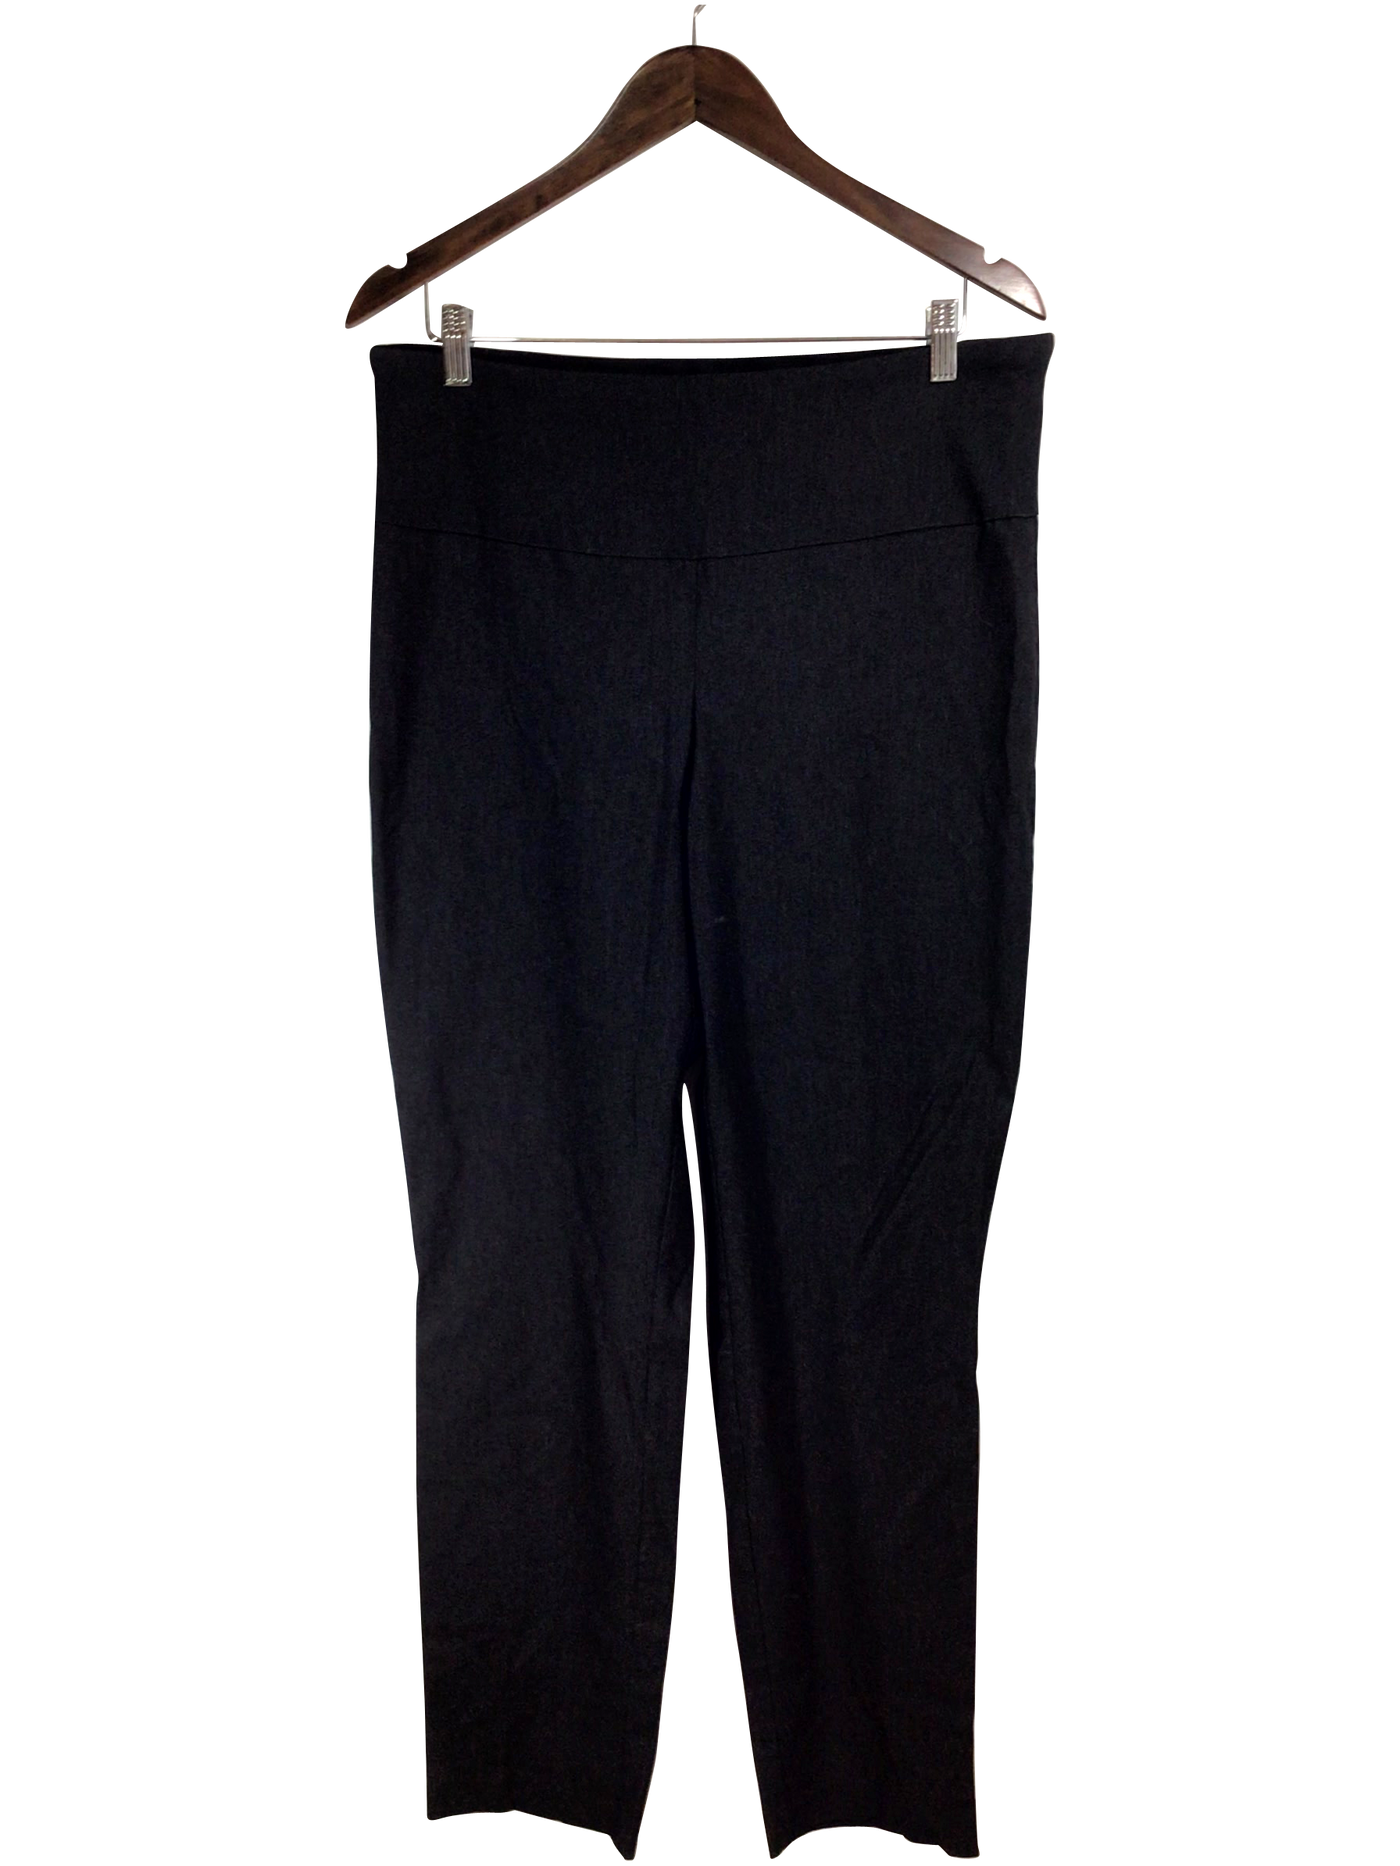 S.C. & CO. Pant Regular fit in Black - Size 18 | 7.99 $ KOOP